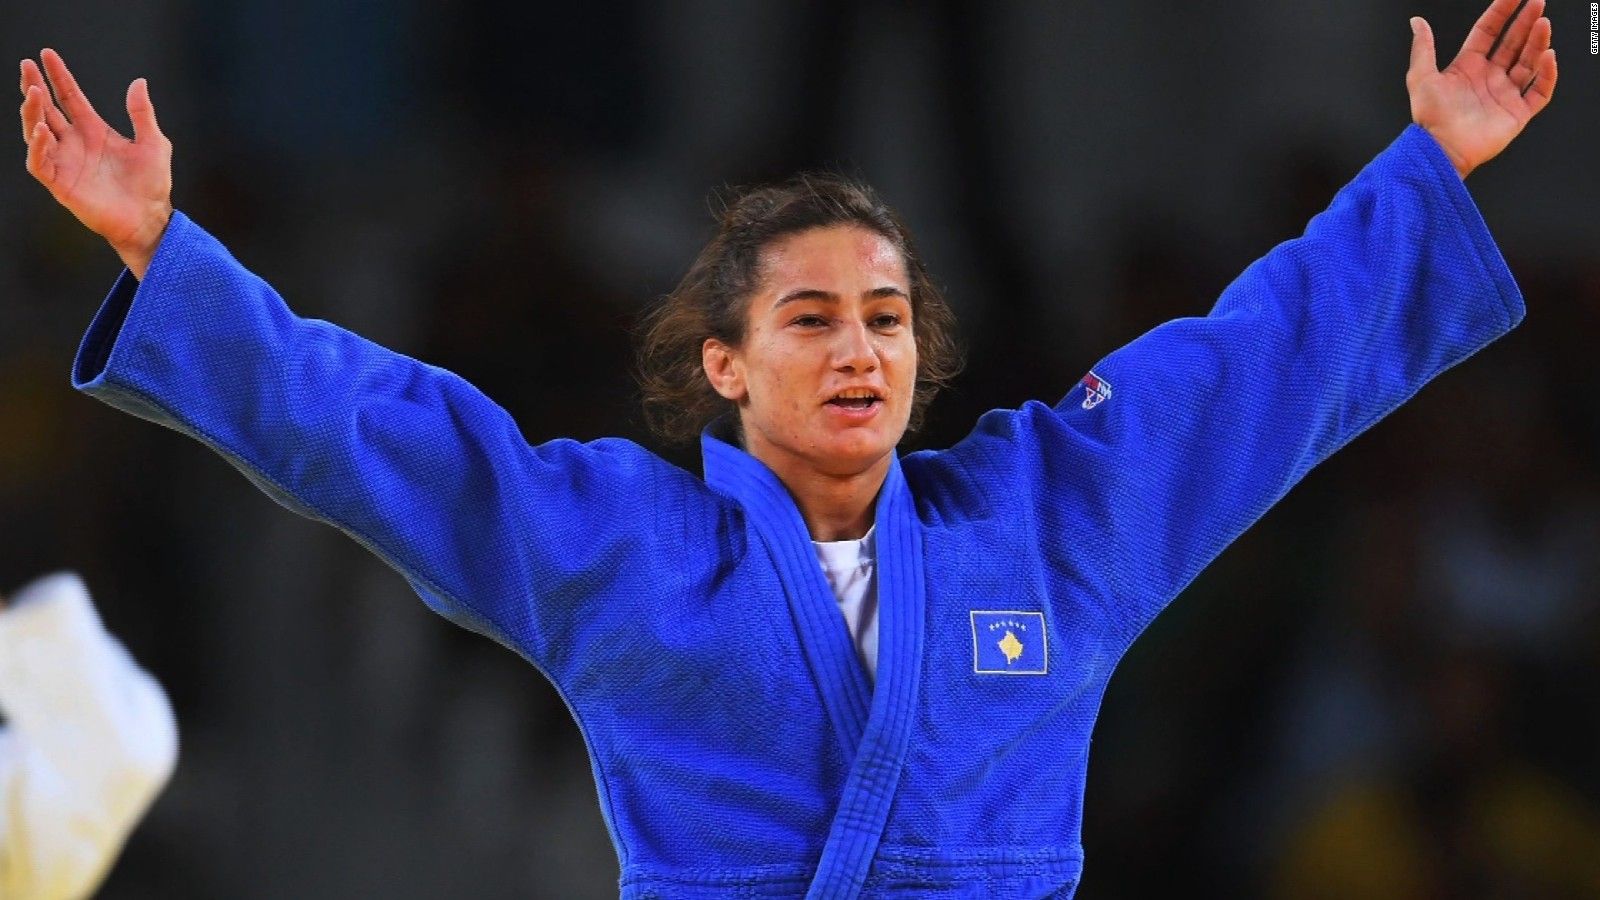 Majlinda Kelmendi wins Kosovo's first Olympic gold medal